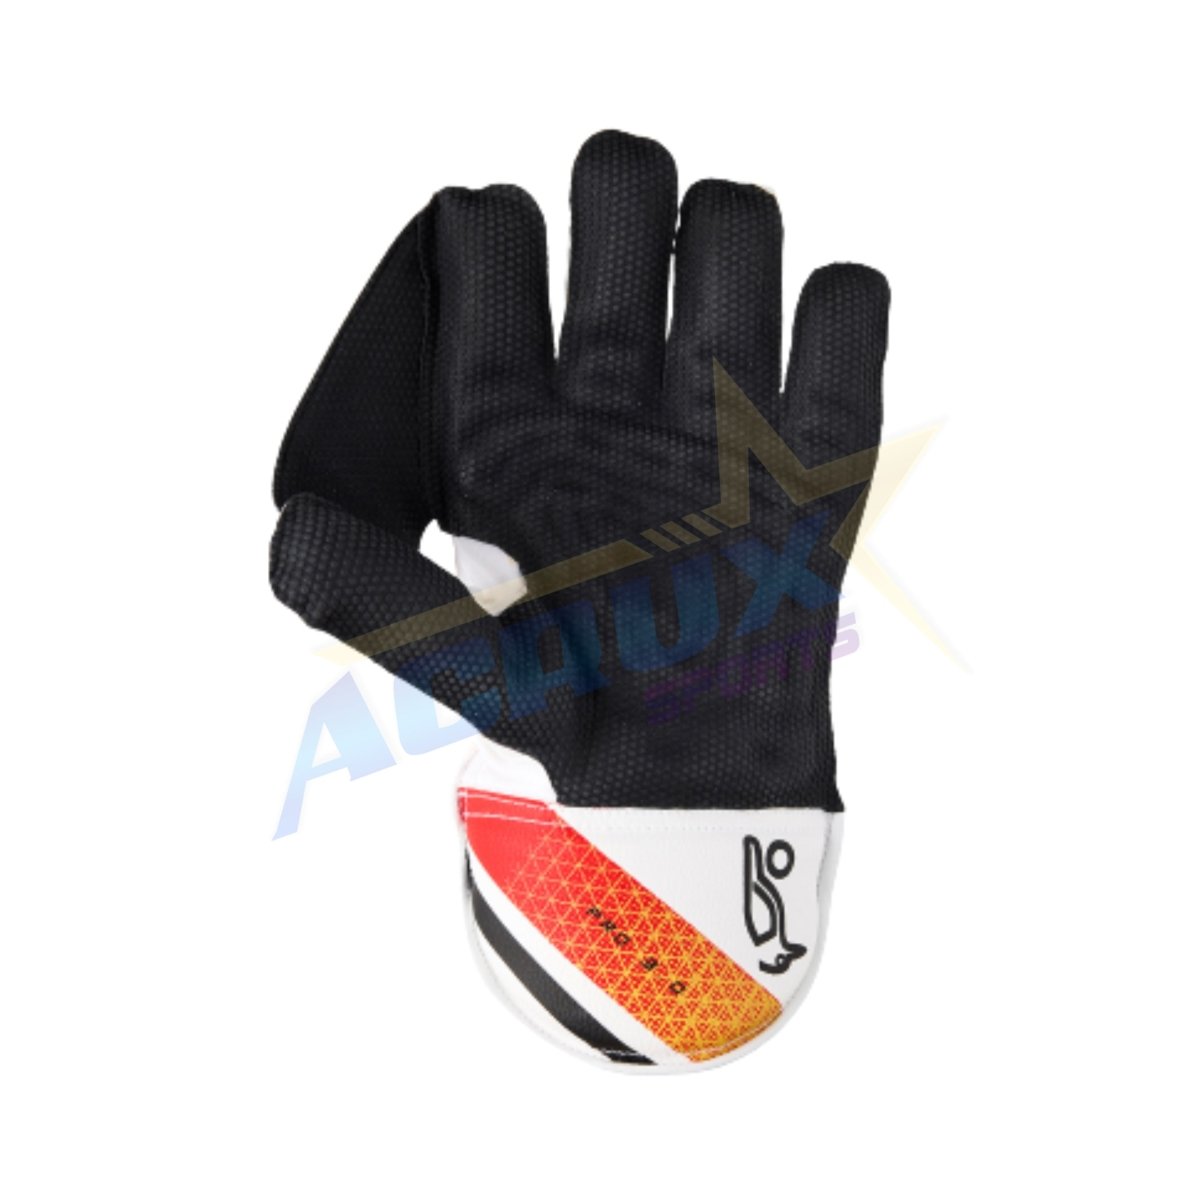 Kookaburra Beast Pro 3.0 Cricket Wicket Keeping Gloves